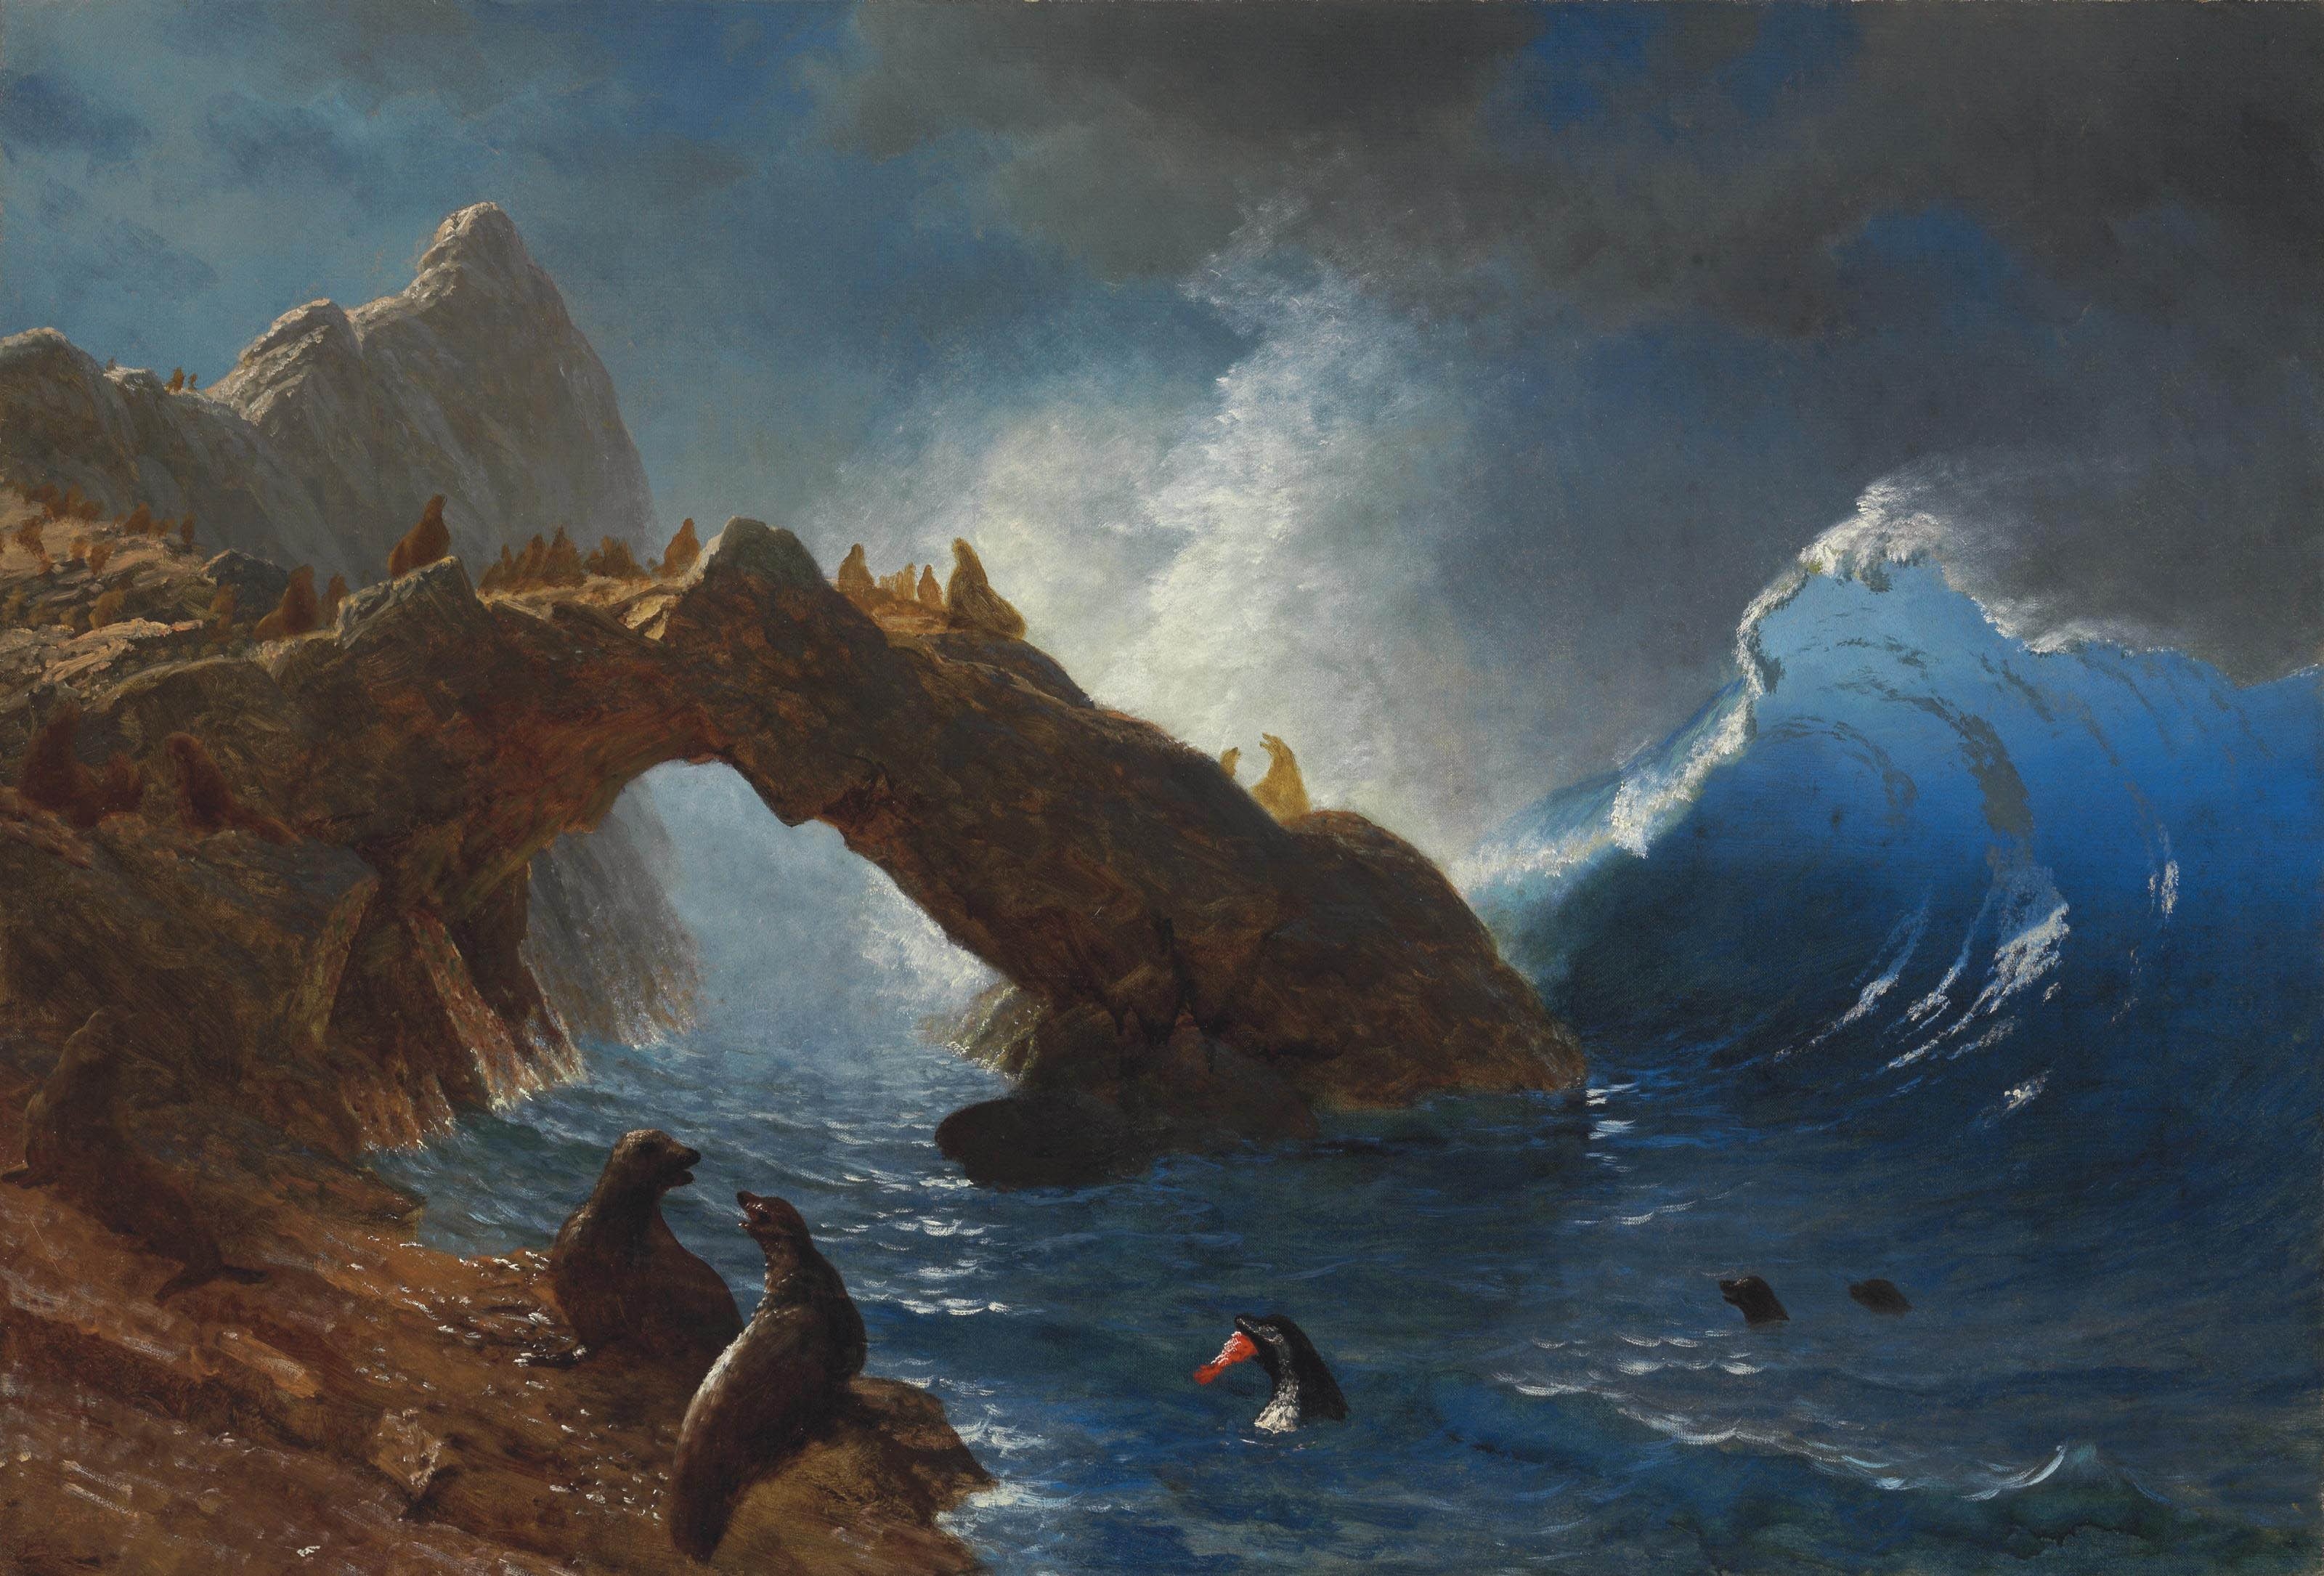 - Classic Painting Photo Poster Print Art Gift Home Wall Decor Animals Waves Crashing Sea Seals on the Rocks Albert Bierstadt 1873